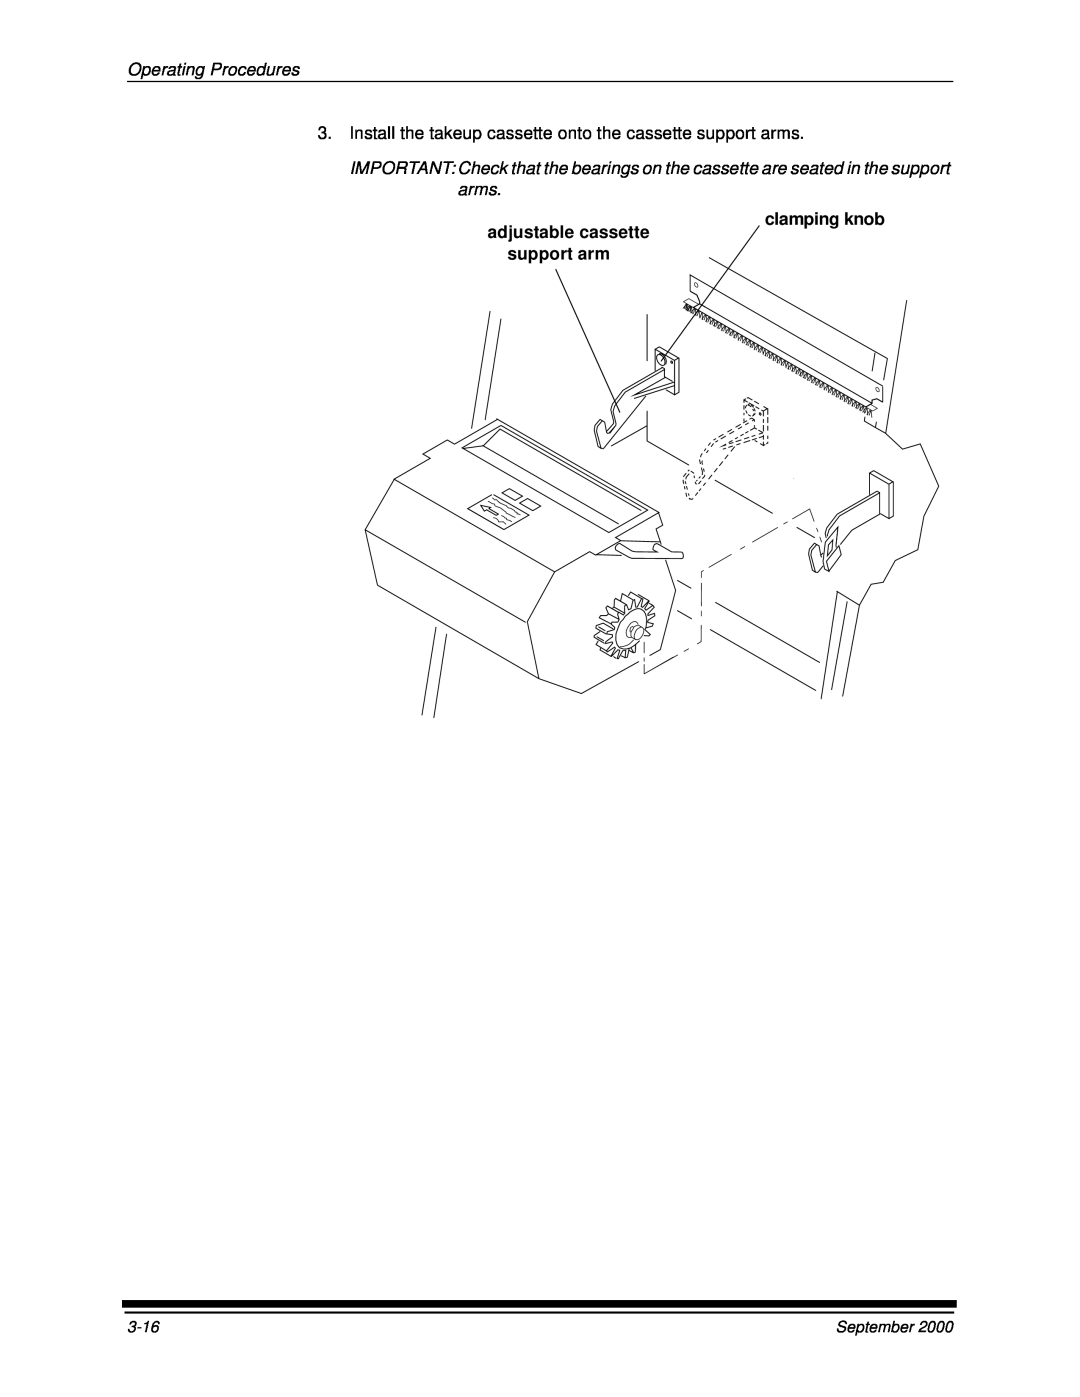 Kodak 20R manual Operating Procedures, clamping knob adjustable cassette support arm, 3-16, September 